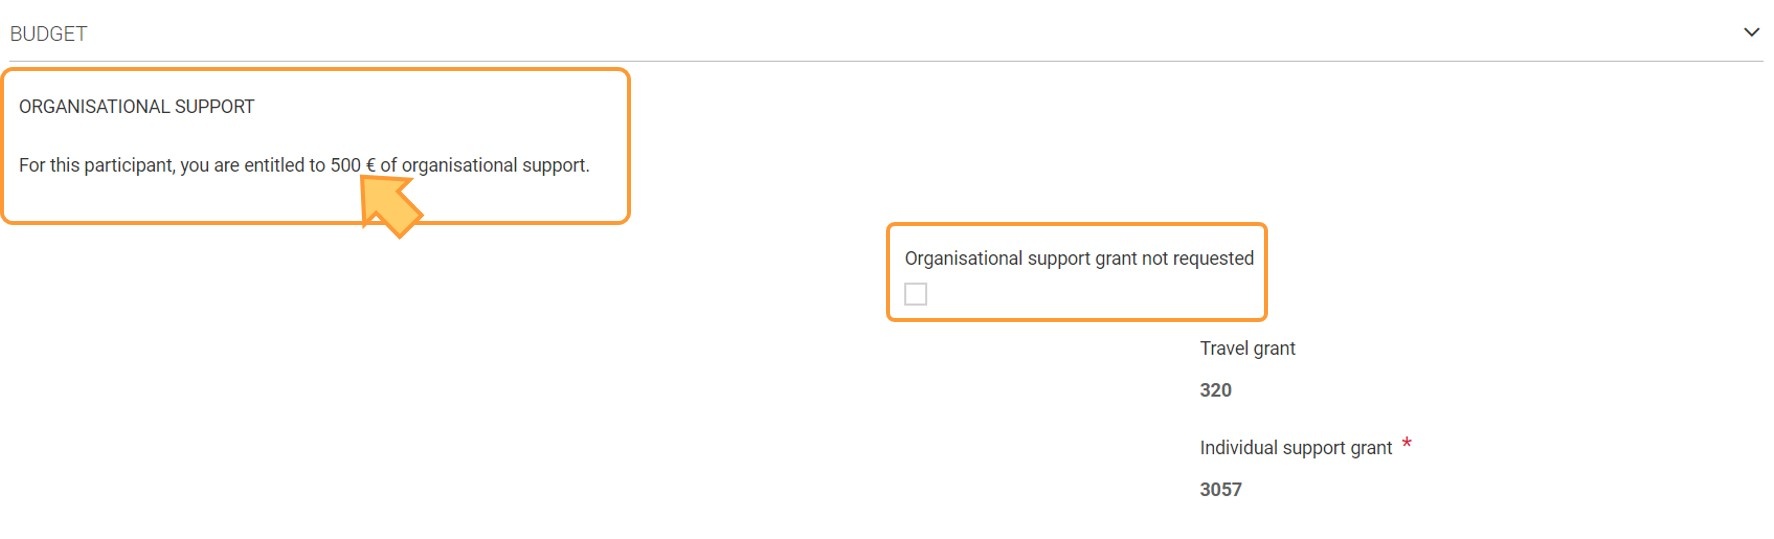 Organisational Support grant